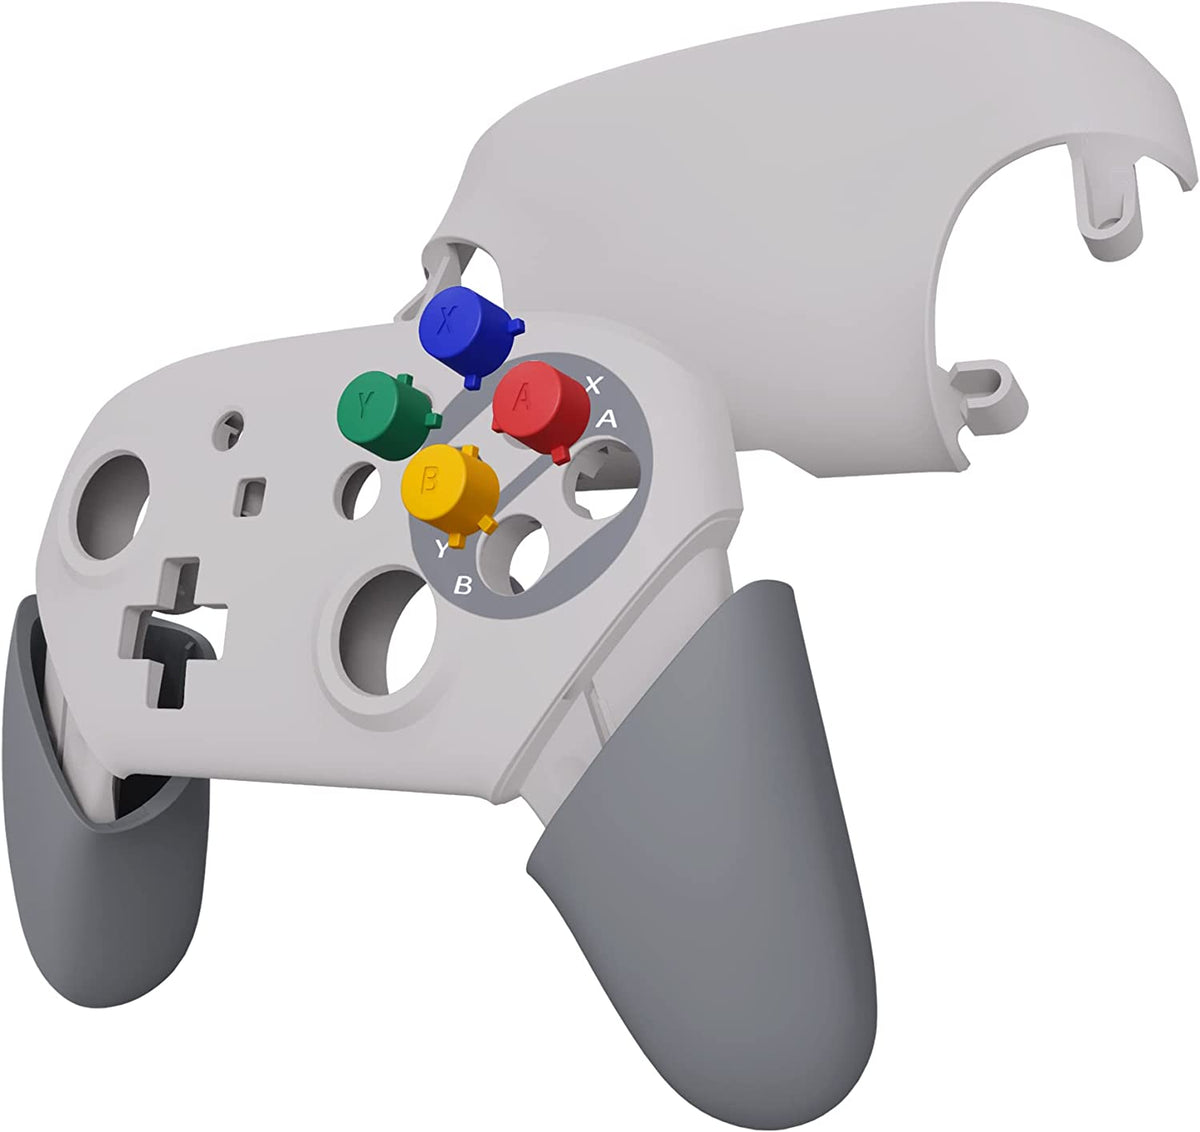 SNES Retro Custom Custom Joy cons for Nintendo Switch – The GameChangers